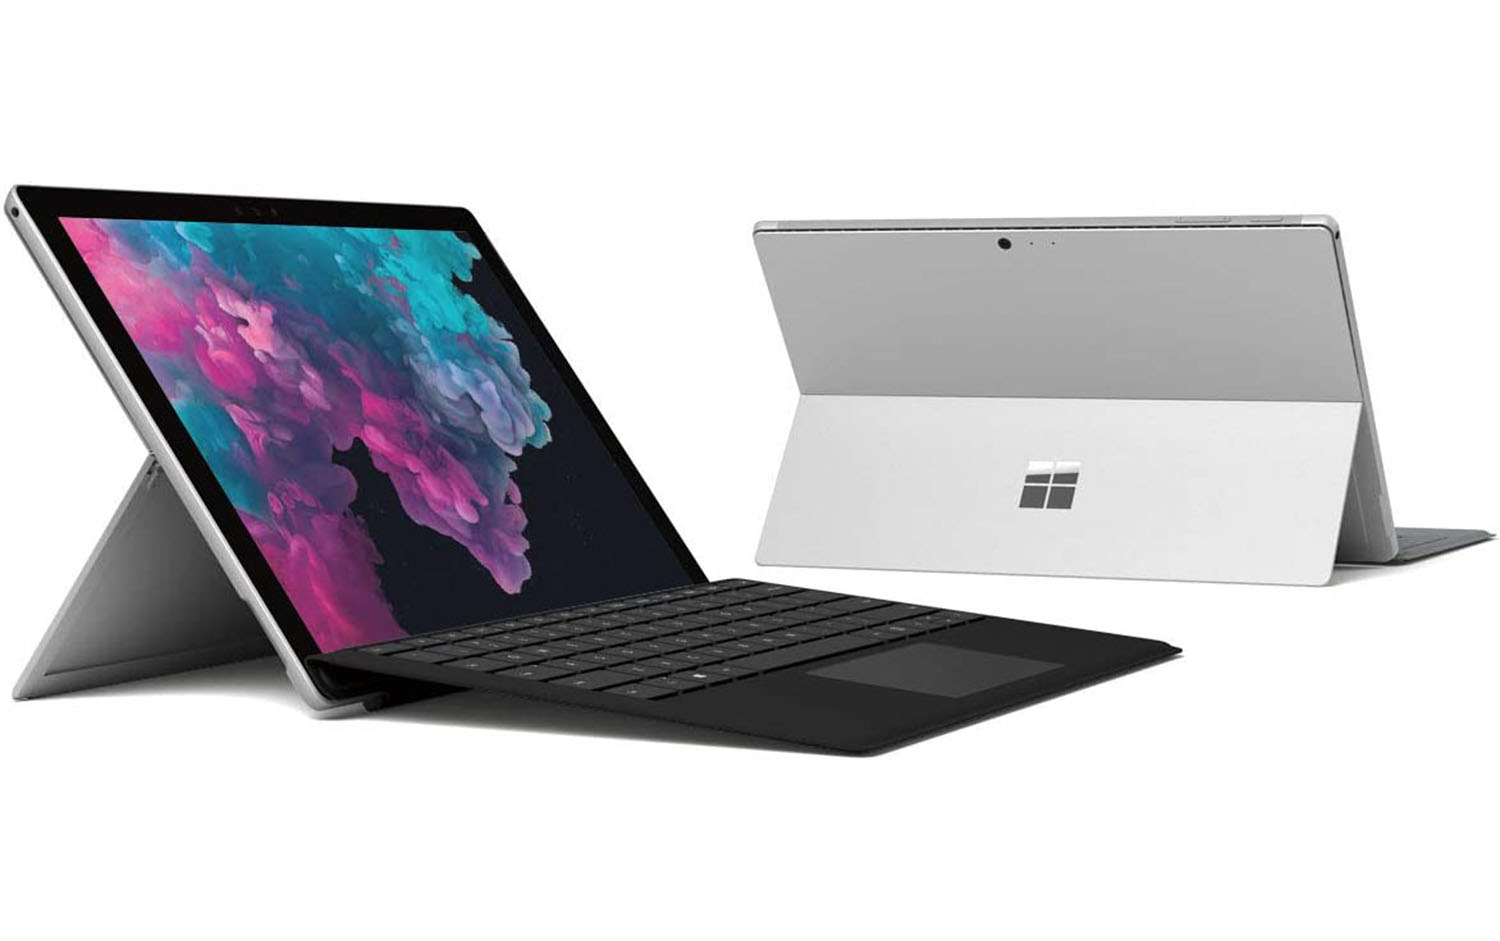 Microsoft Surface Pro 6 Intel Core i5 8th Gen 8GB RAM 256GB SSD Touchscreen Windows 10 Home